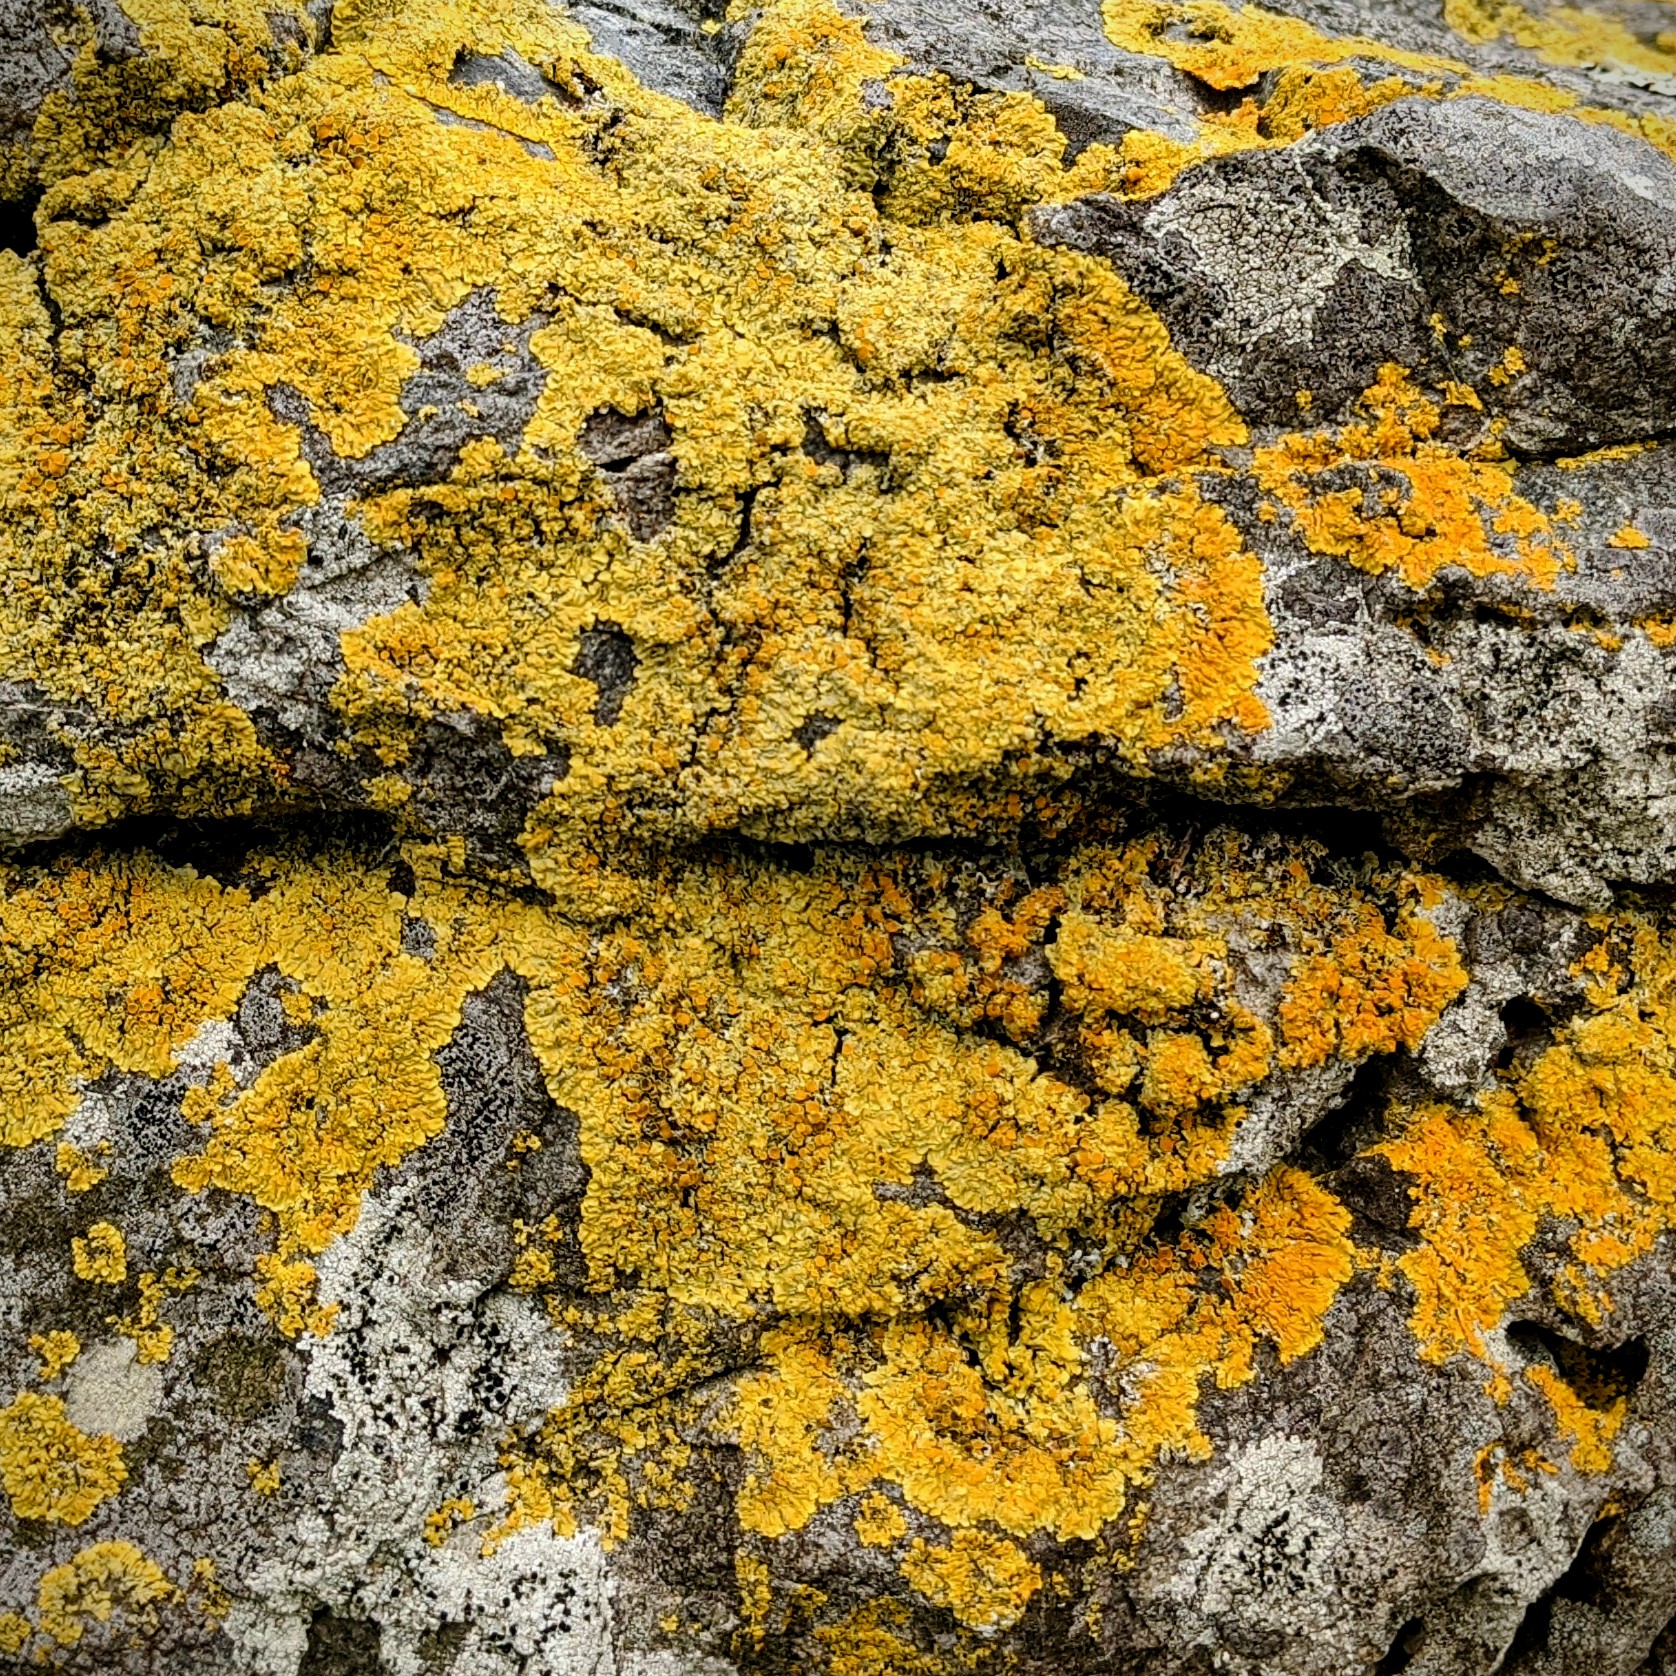 Sunburst lichen on a seashore rocks